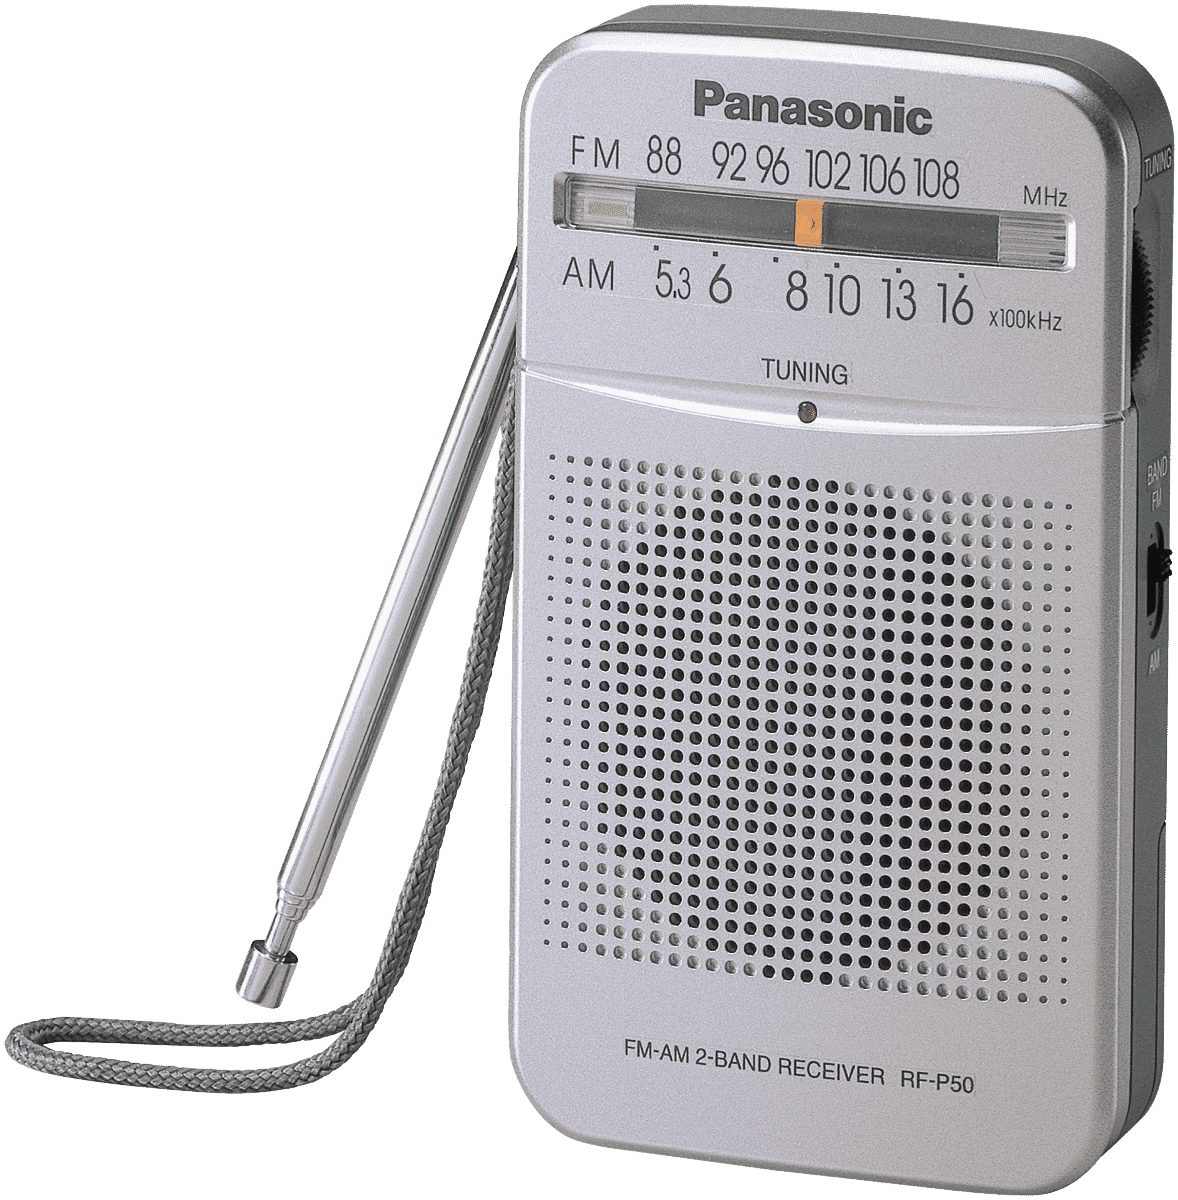 Panasonic RF-P50DGC-S AM/FM Handheld Pocket Radio at The Good Guys